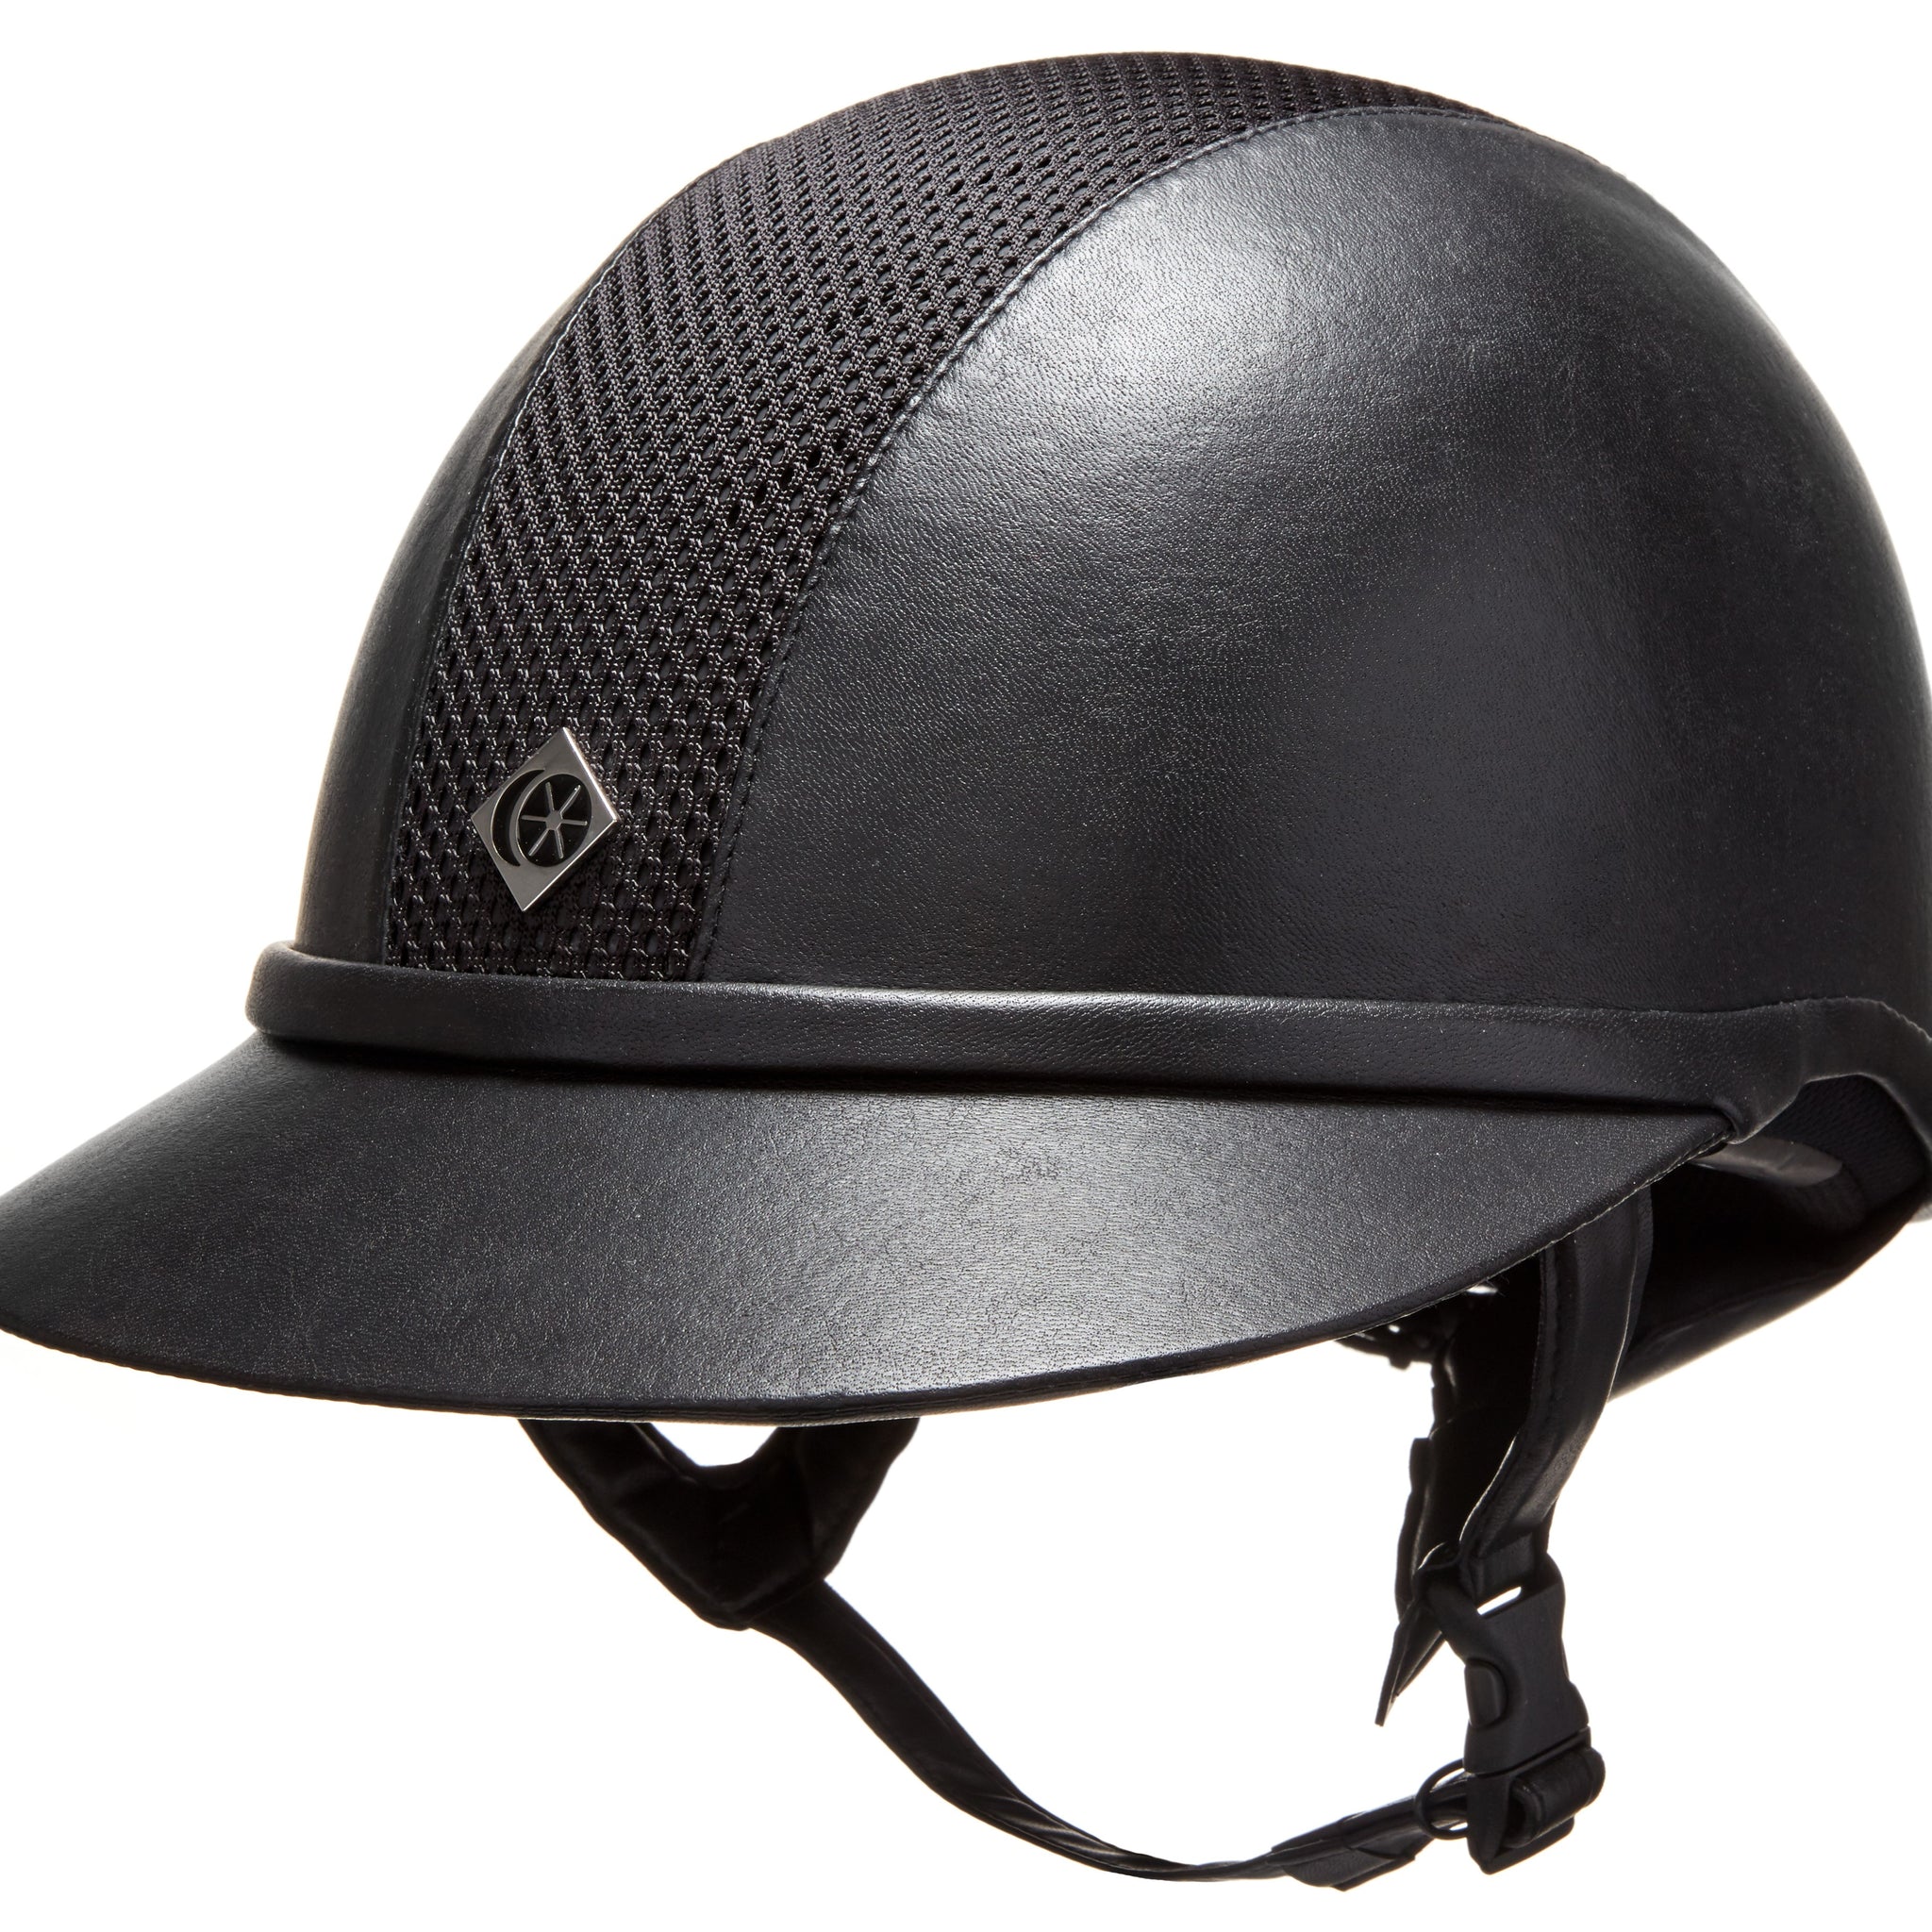 Charles Owen Leather Look SP8 Plus - Riding Hat - Black 